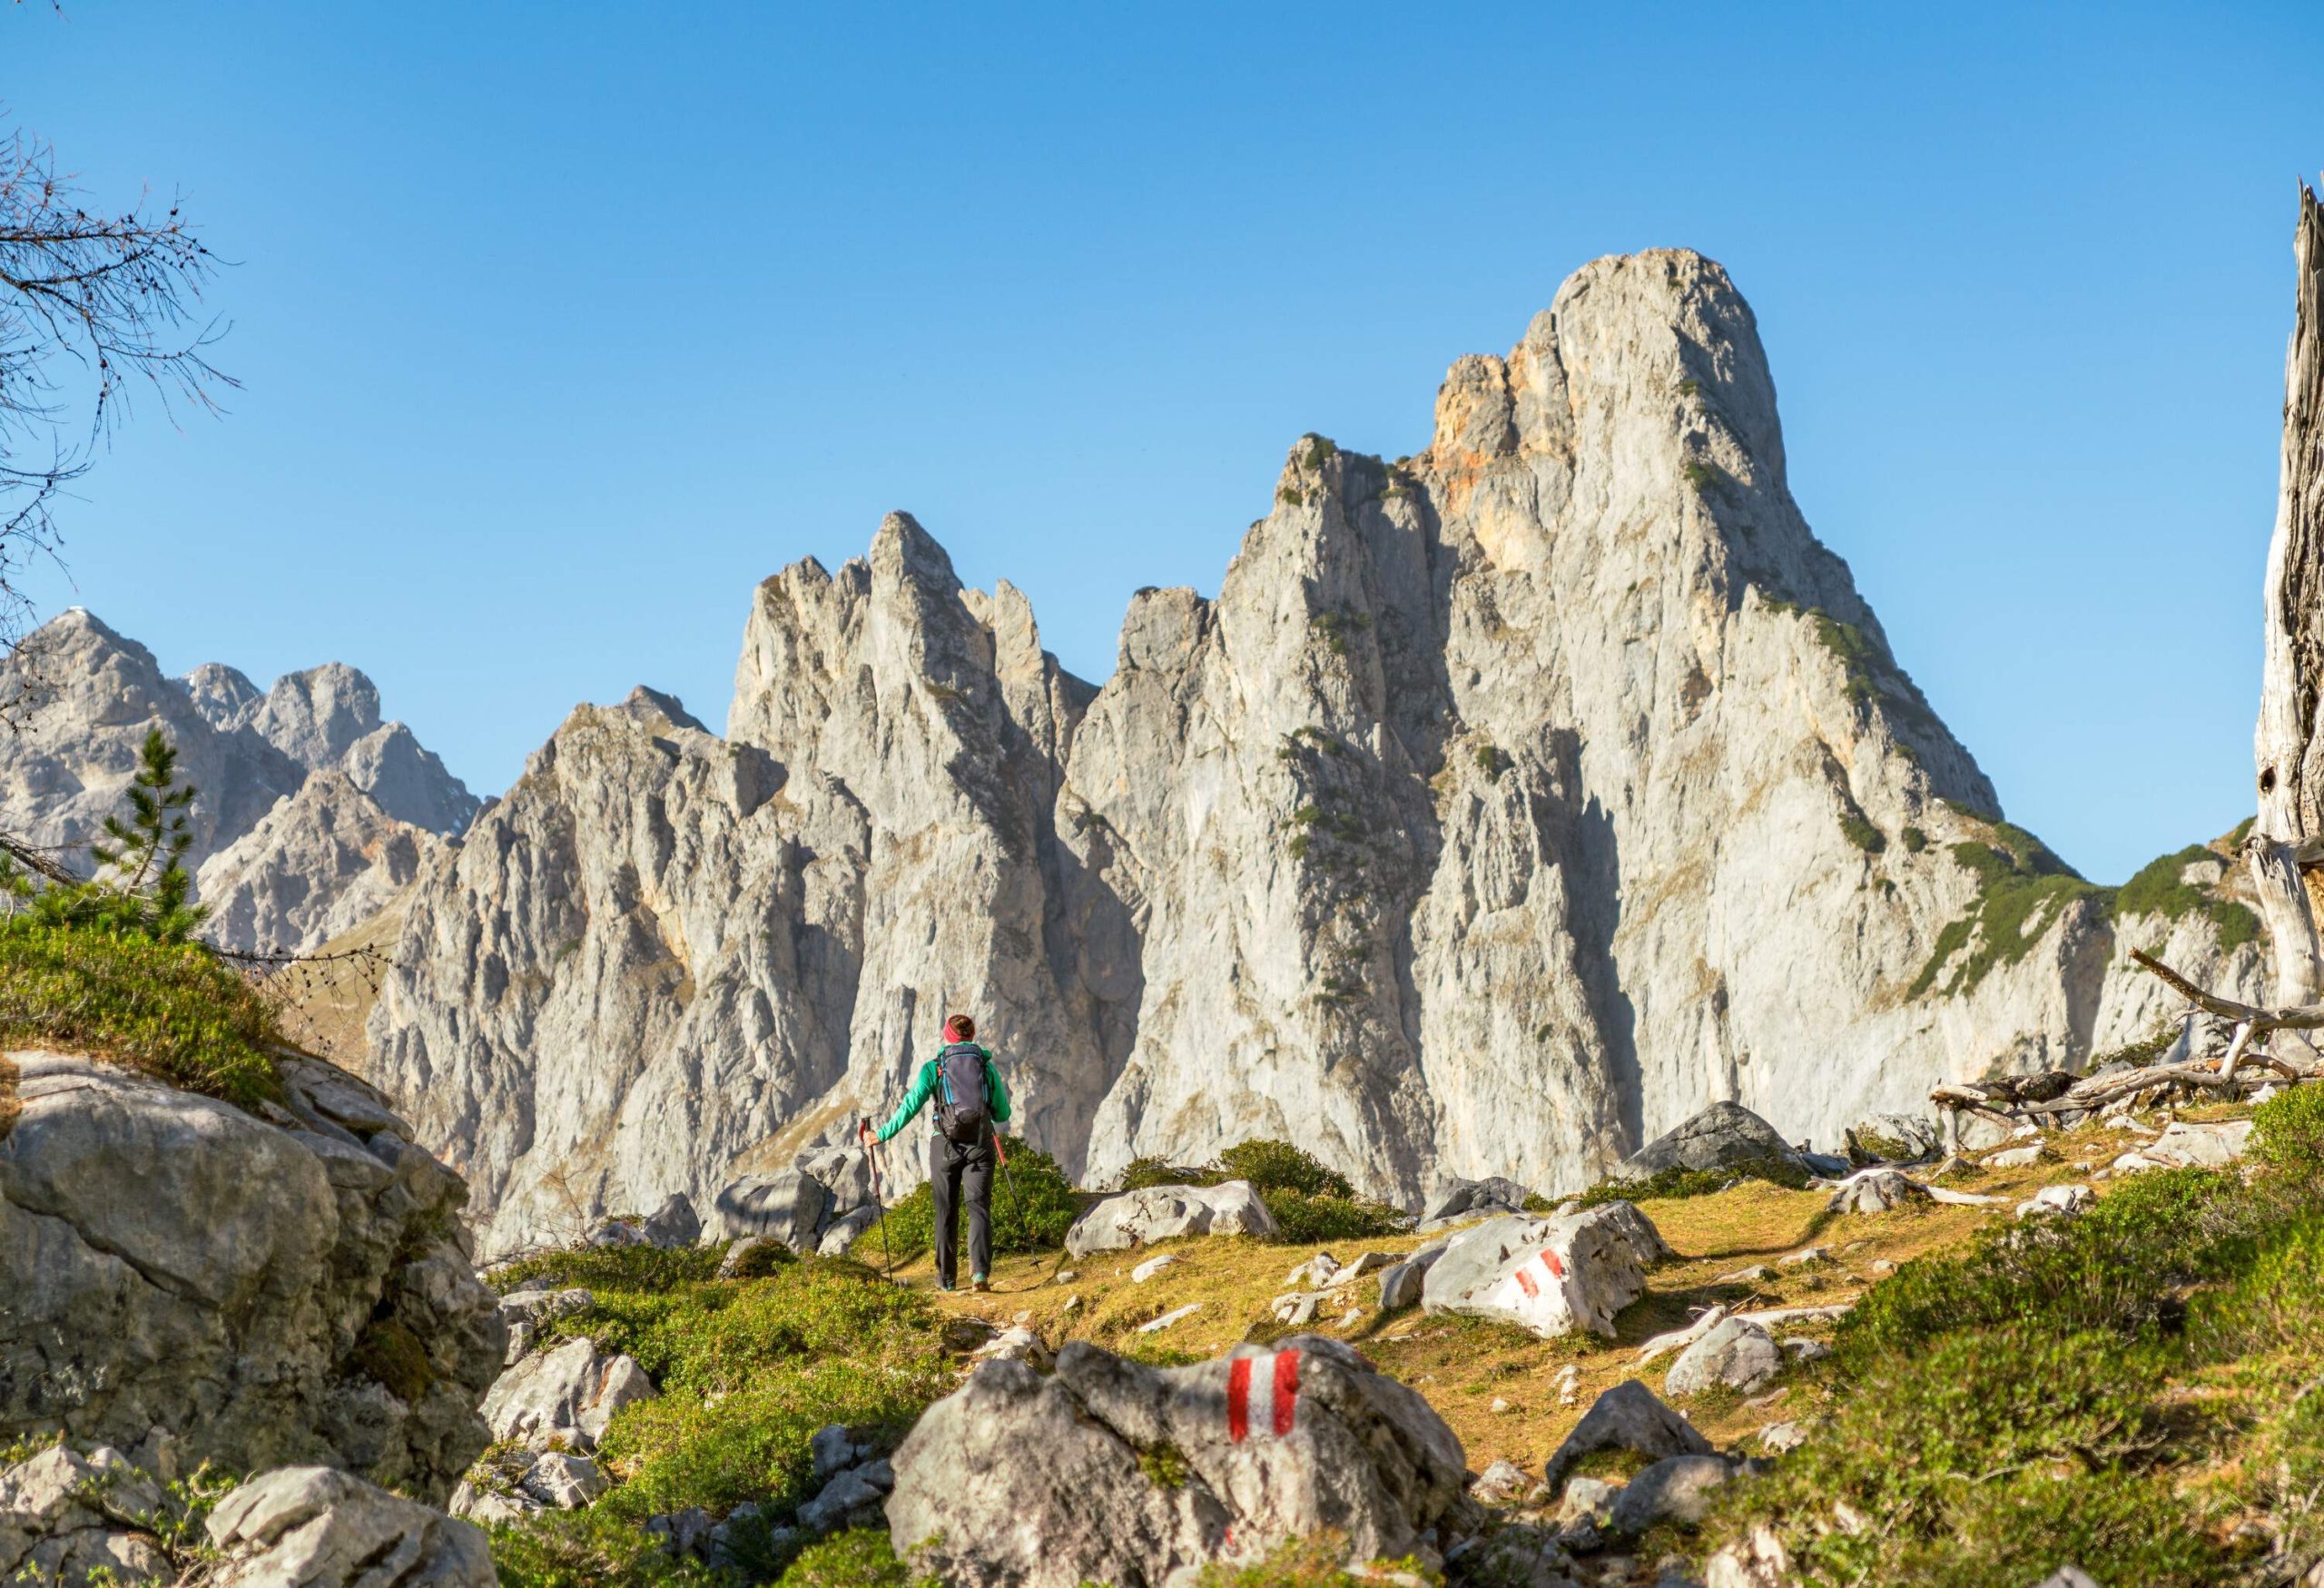 A hiker walking along the base of a limestone massif.